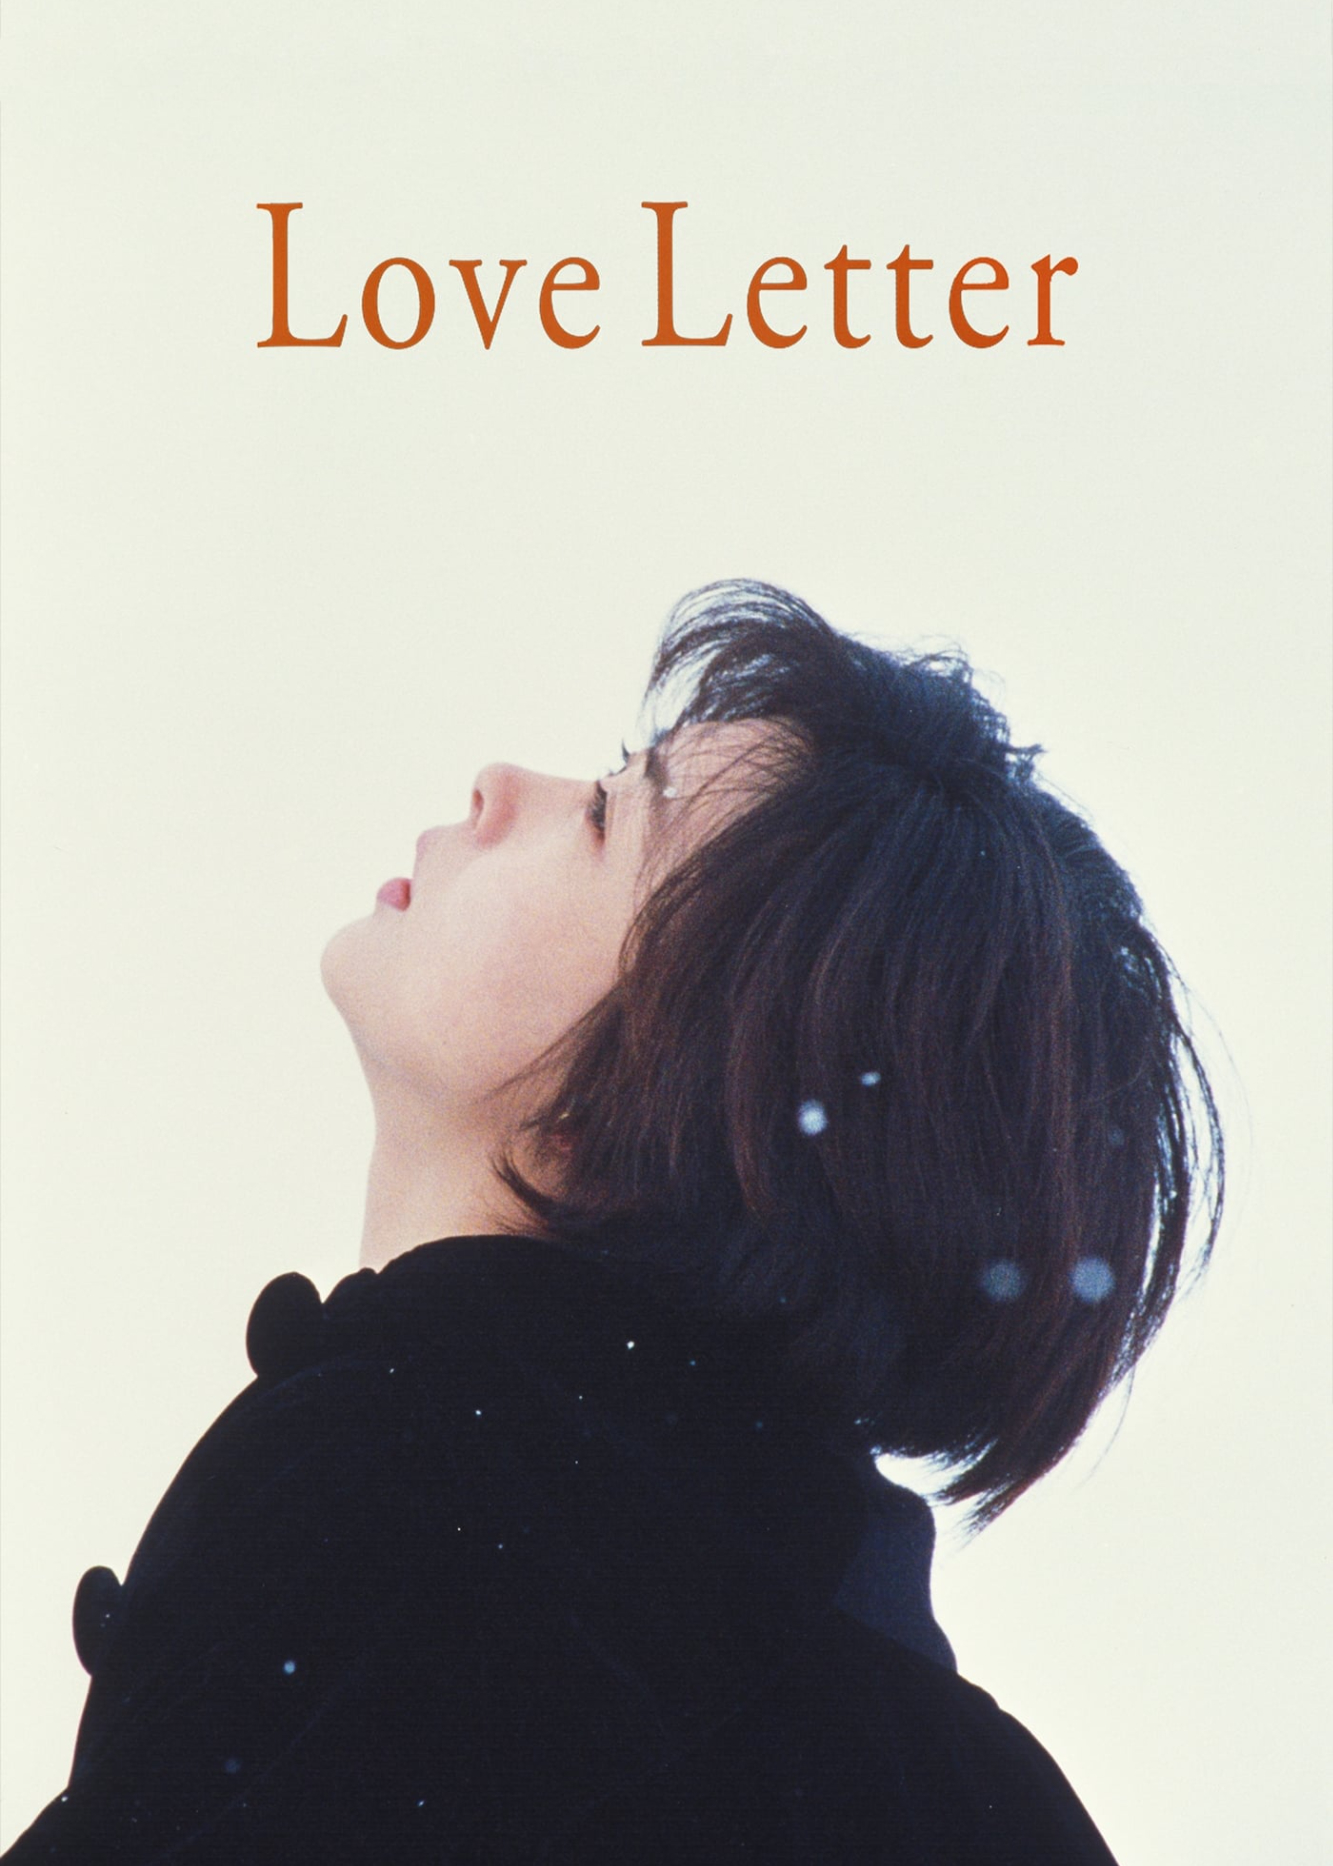 Xem Phim Love Letter - Love Letter - online truc tuyen vietsub mien phi hinh anh 1